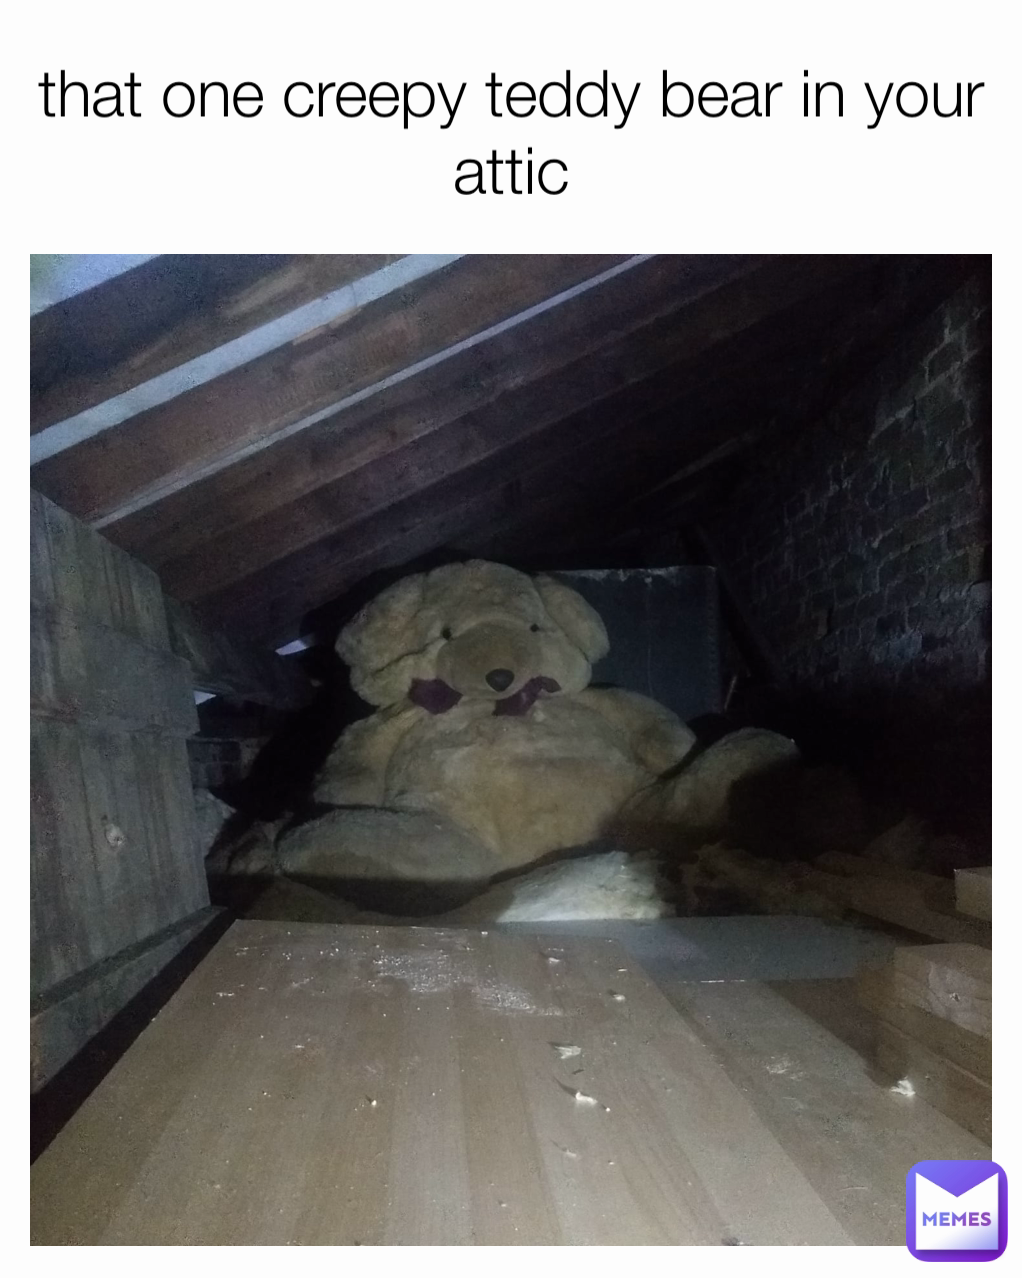 snuggle bear meme